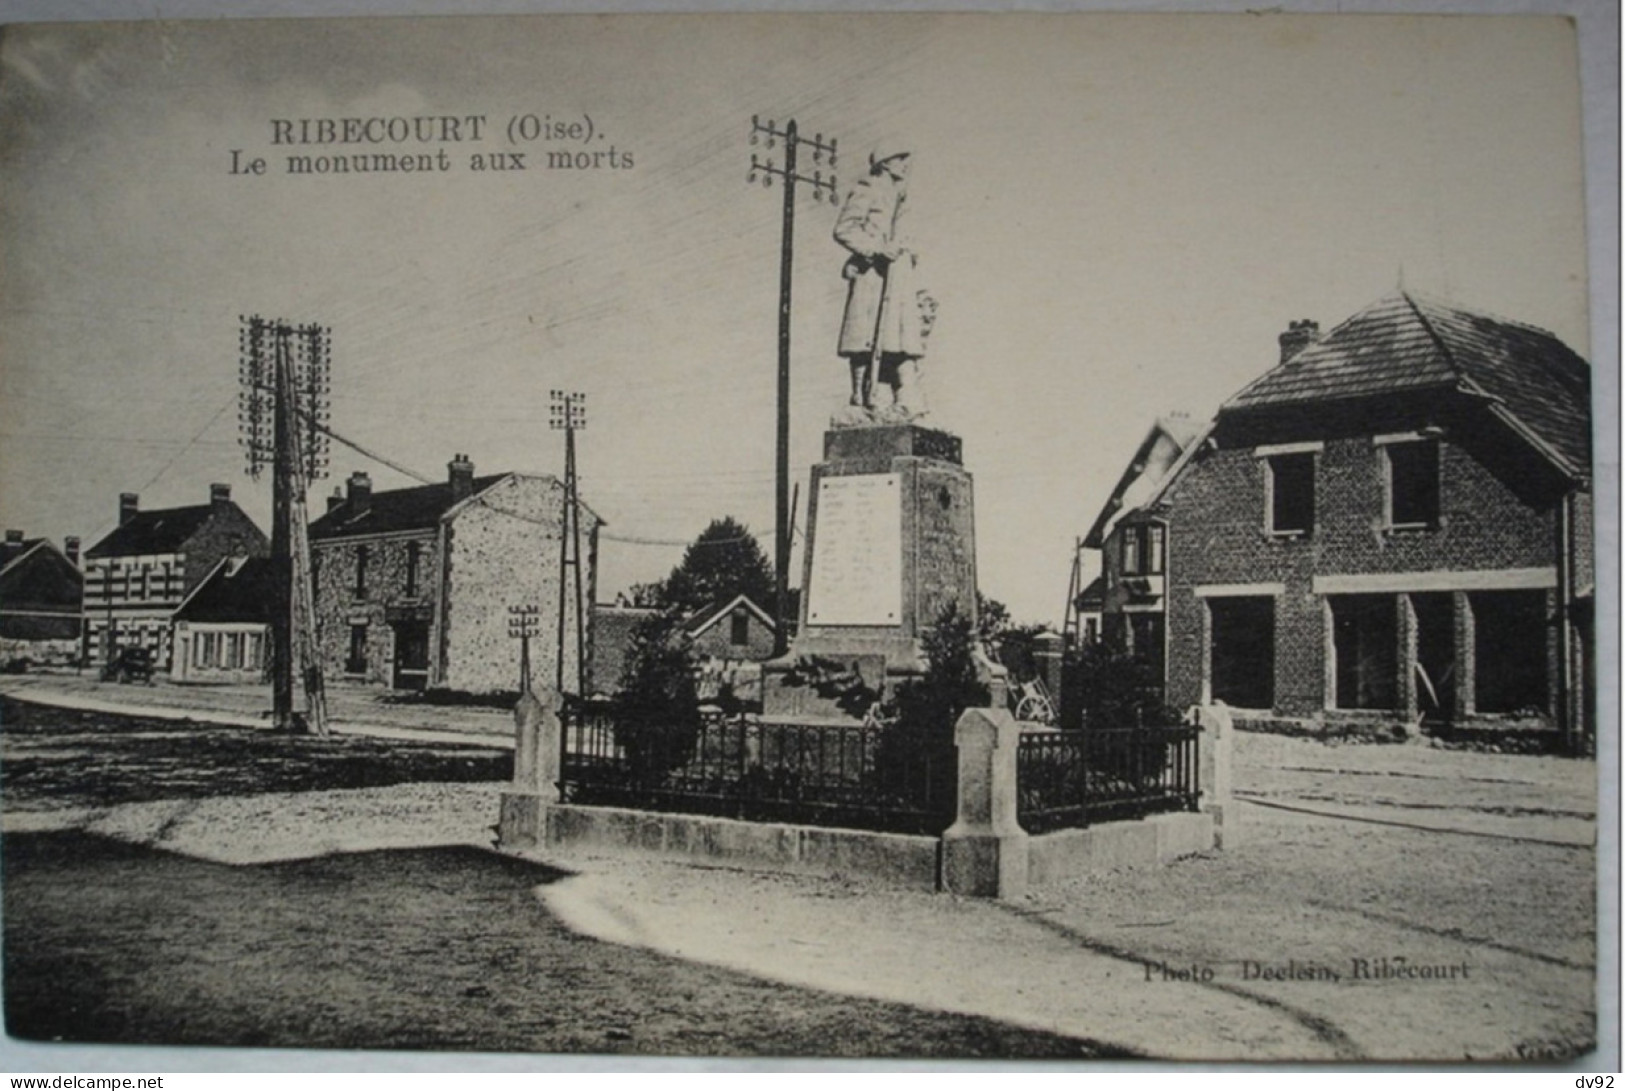 OISE RIBECOURT MONUMENT AUX MORTS - Ribecourt Dreslincourt